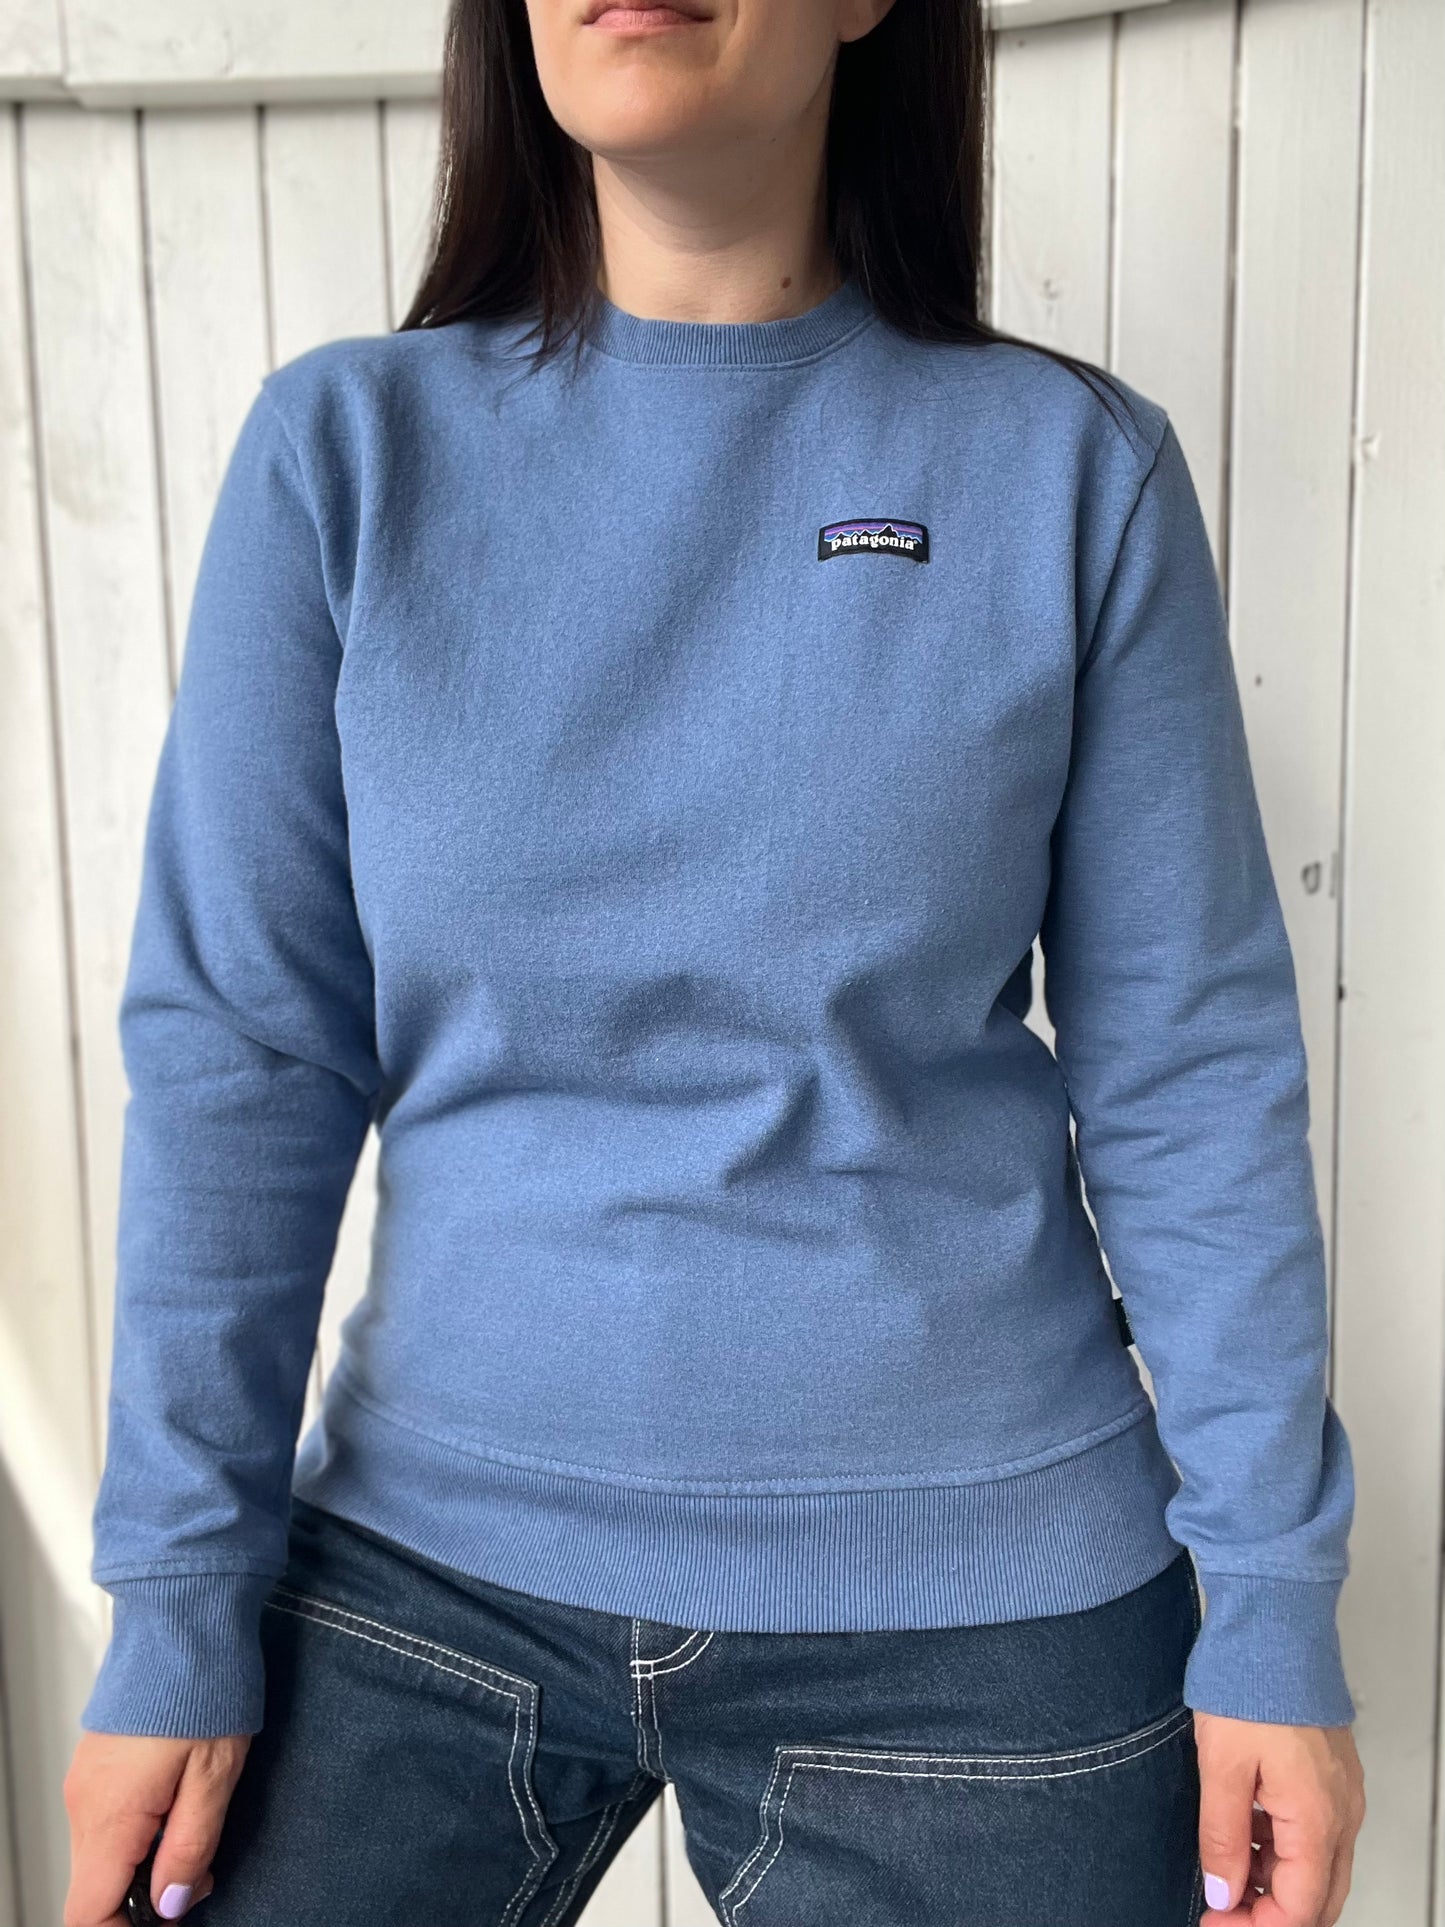 Patagonia Uprisal Crewneck Sweater  - Size M